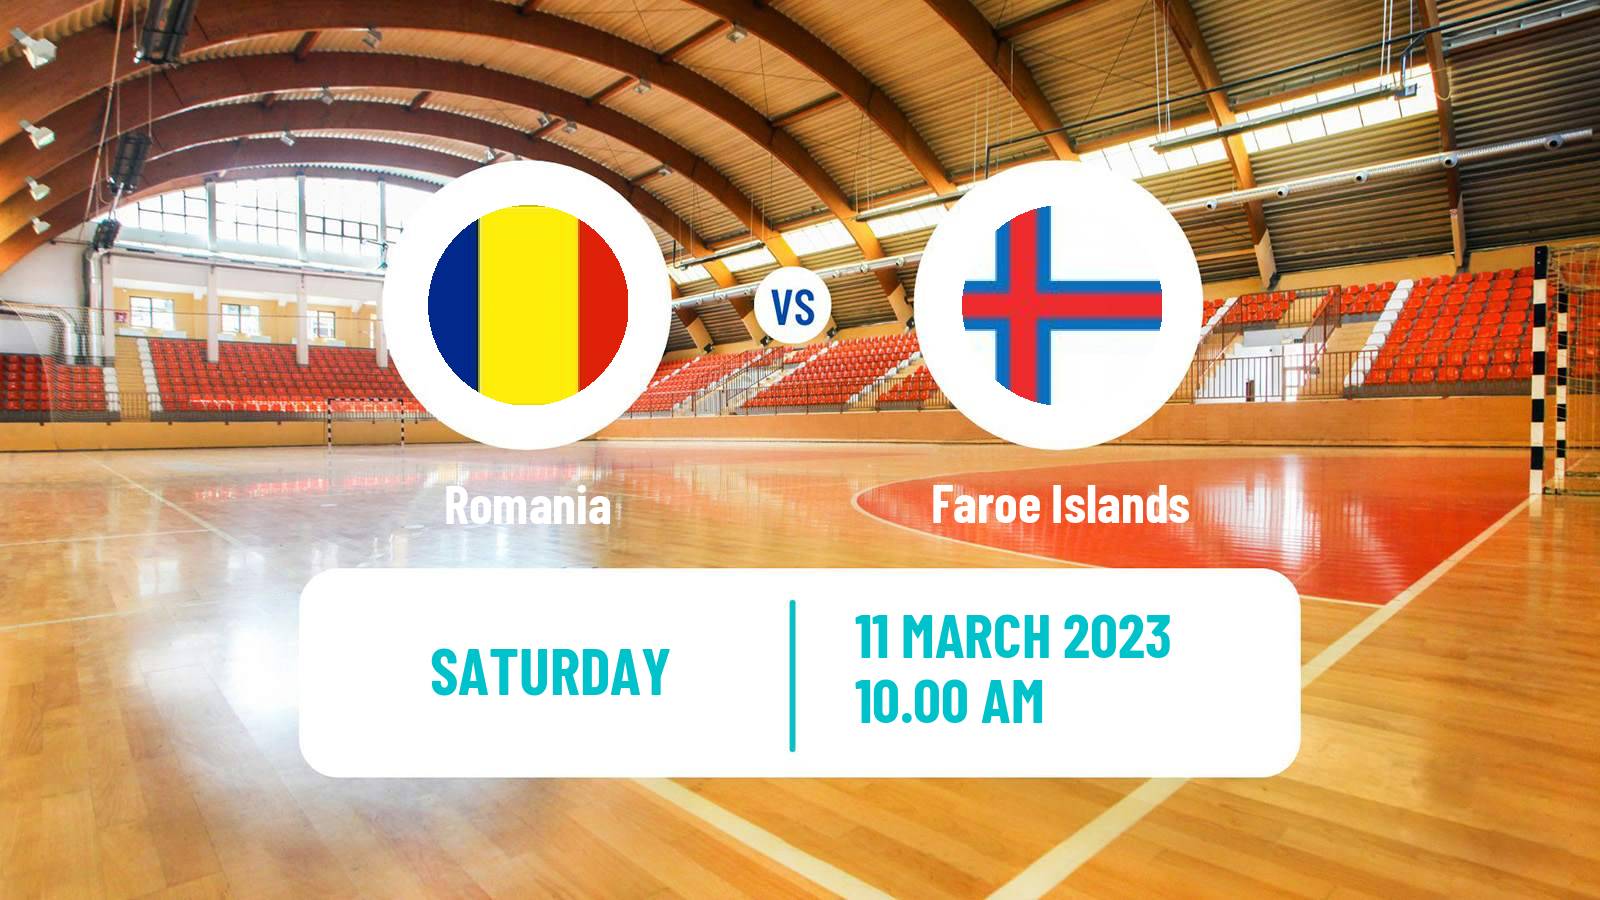 Handball Handball European Championship Romania - Faroe Islands